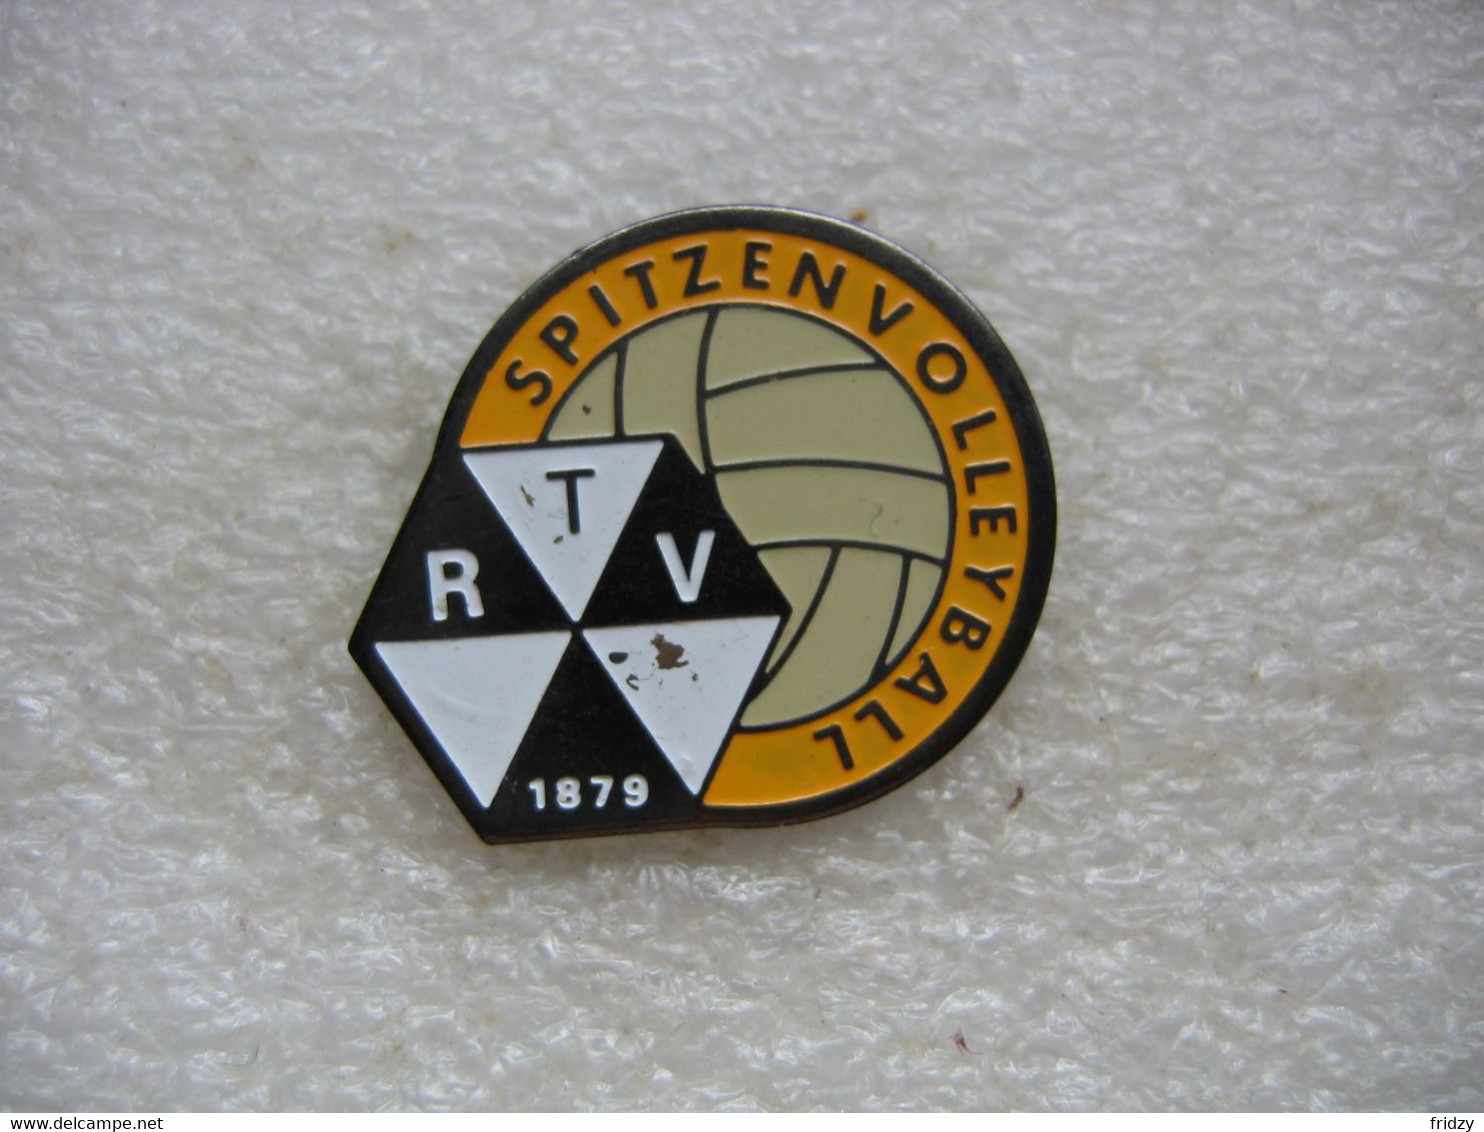 Pin's Spitzenvolleyball, RTV 1879 Basel Est Un Club Suisse De Volleyball Basé à Bâle - Volleyball